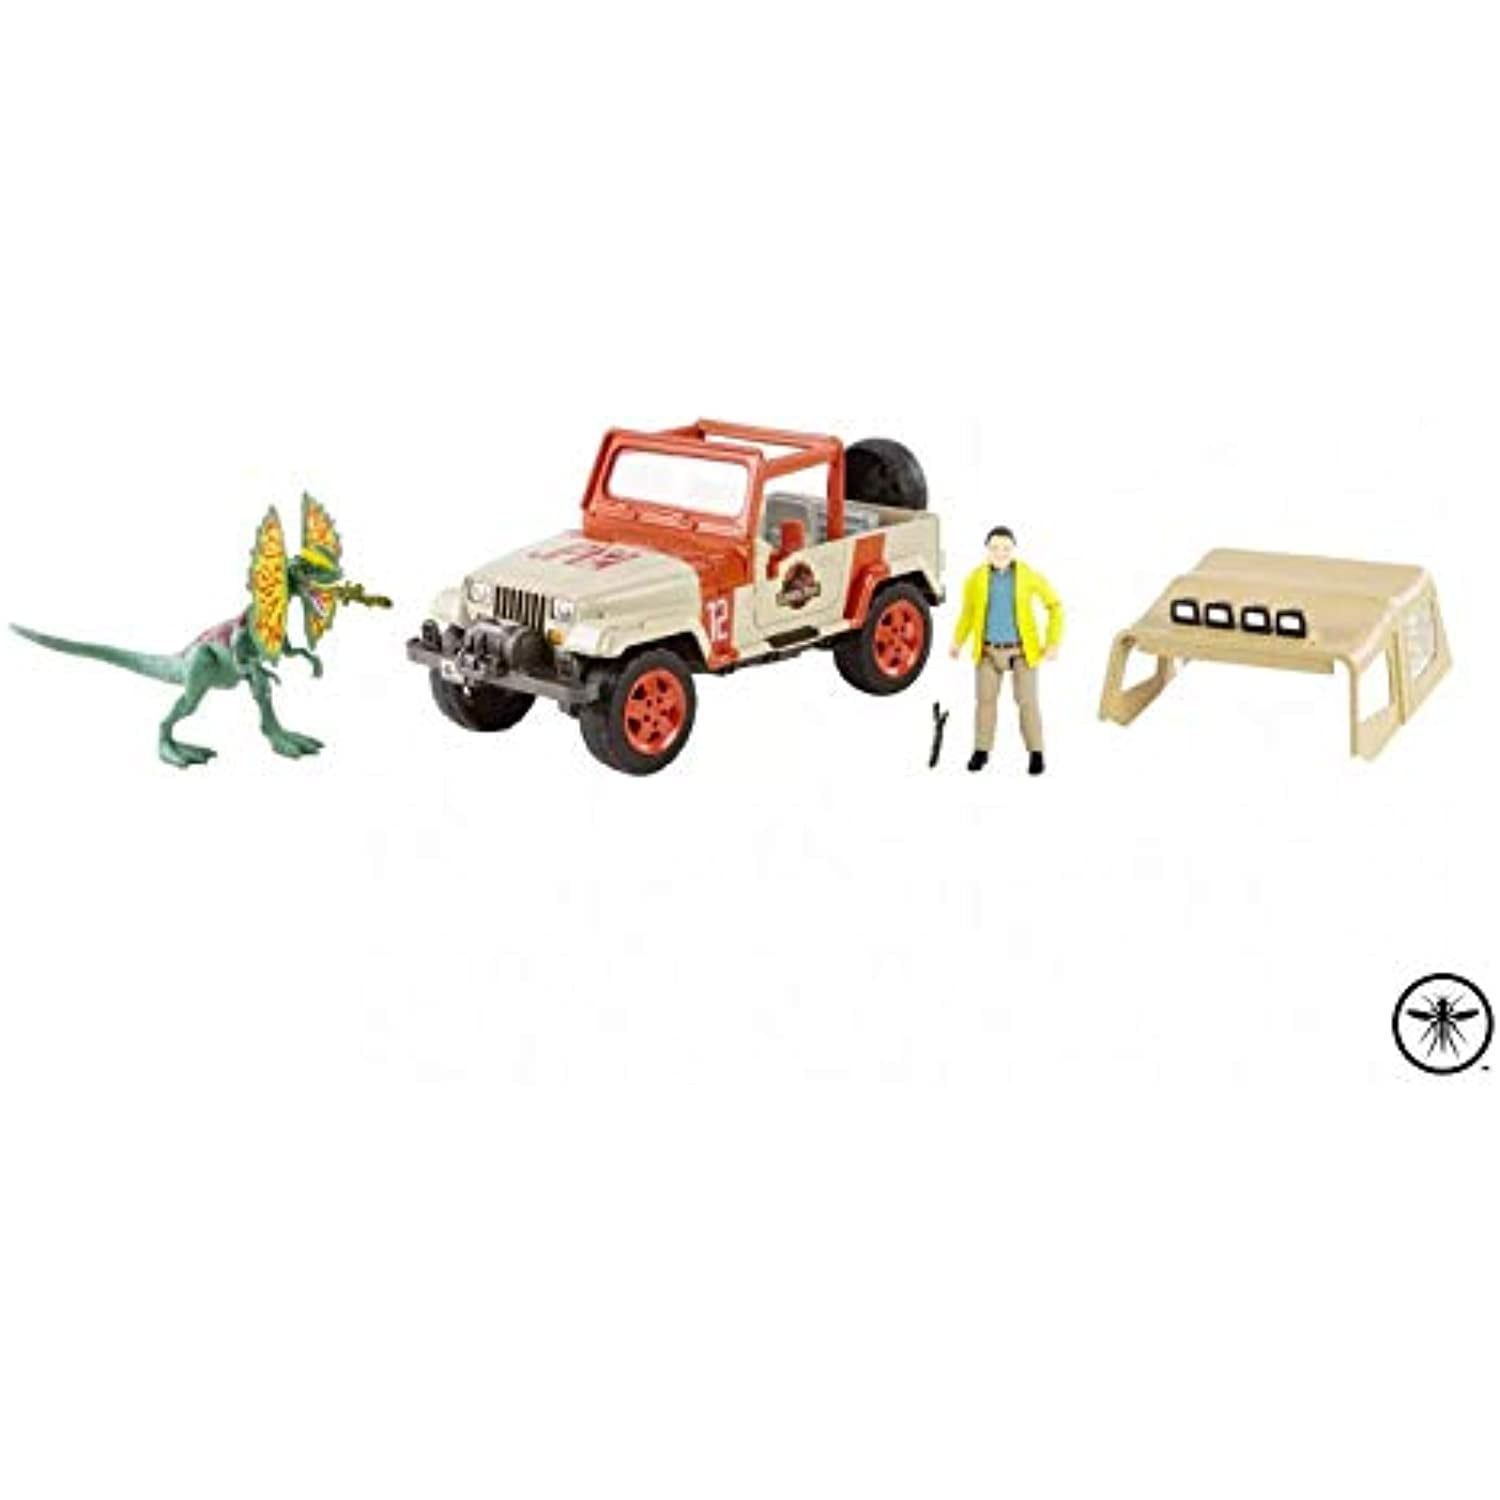 NEU Jurassic World Dennis Nedry Getaway Pack Legacy Collection Mattel 